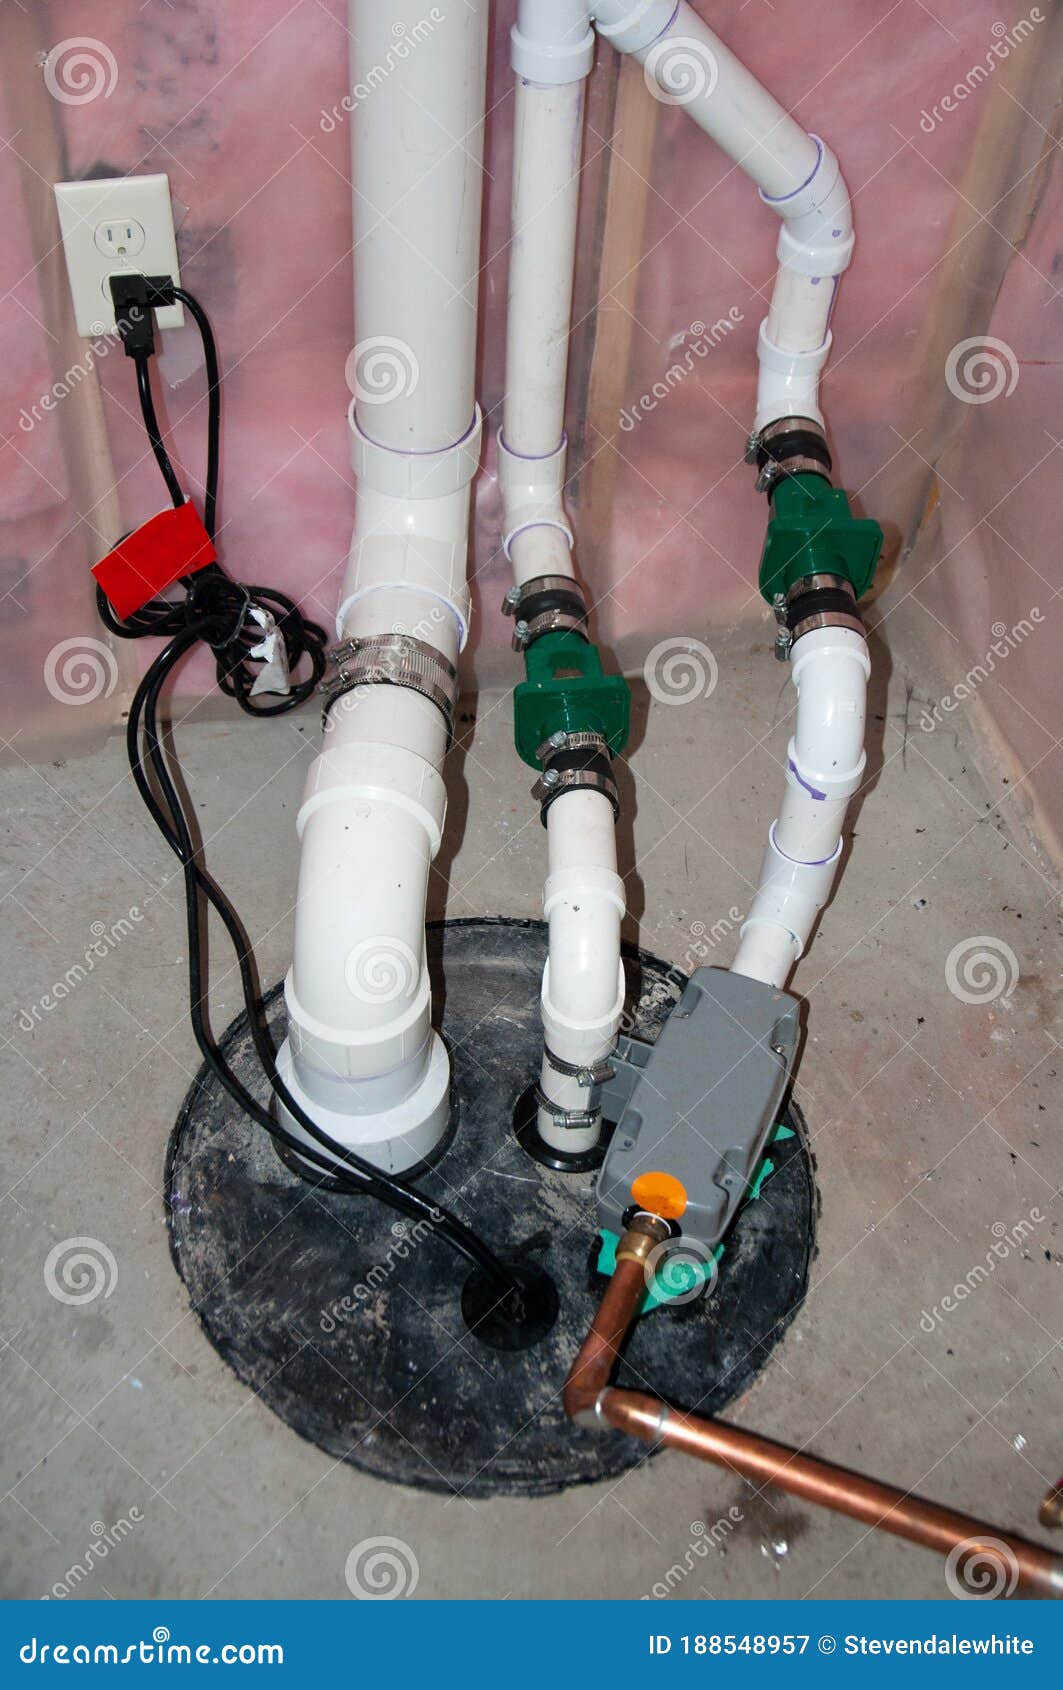 sump pump manhole with water backup and radon mitigation